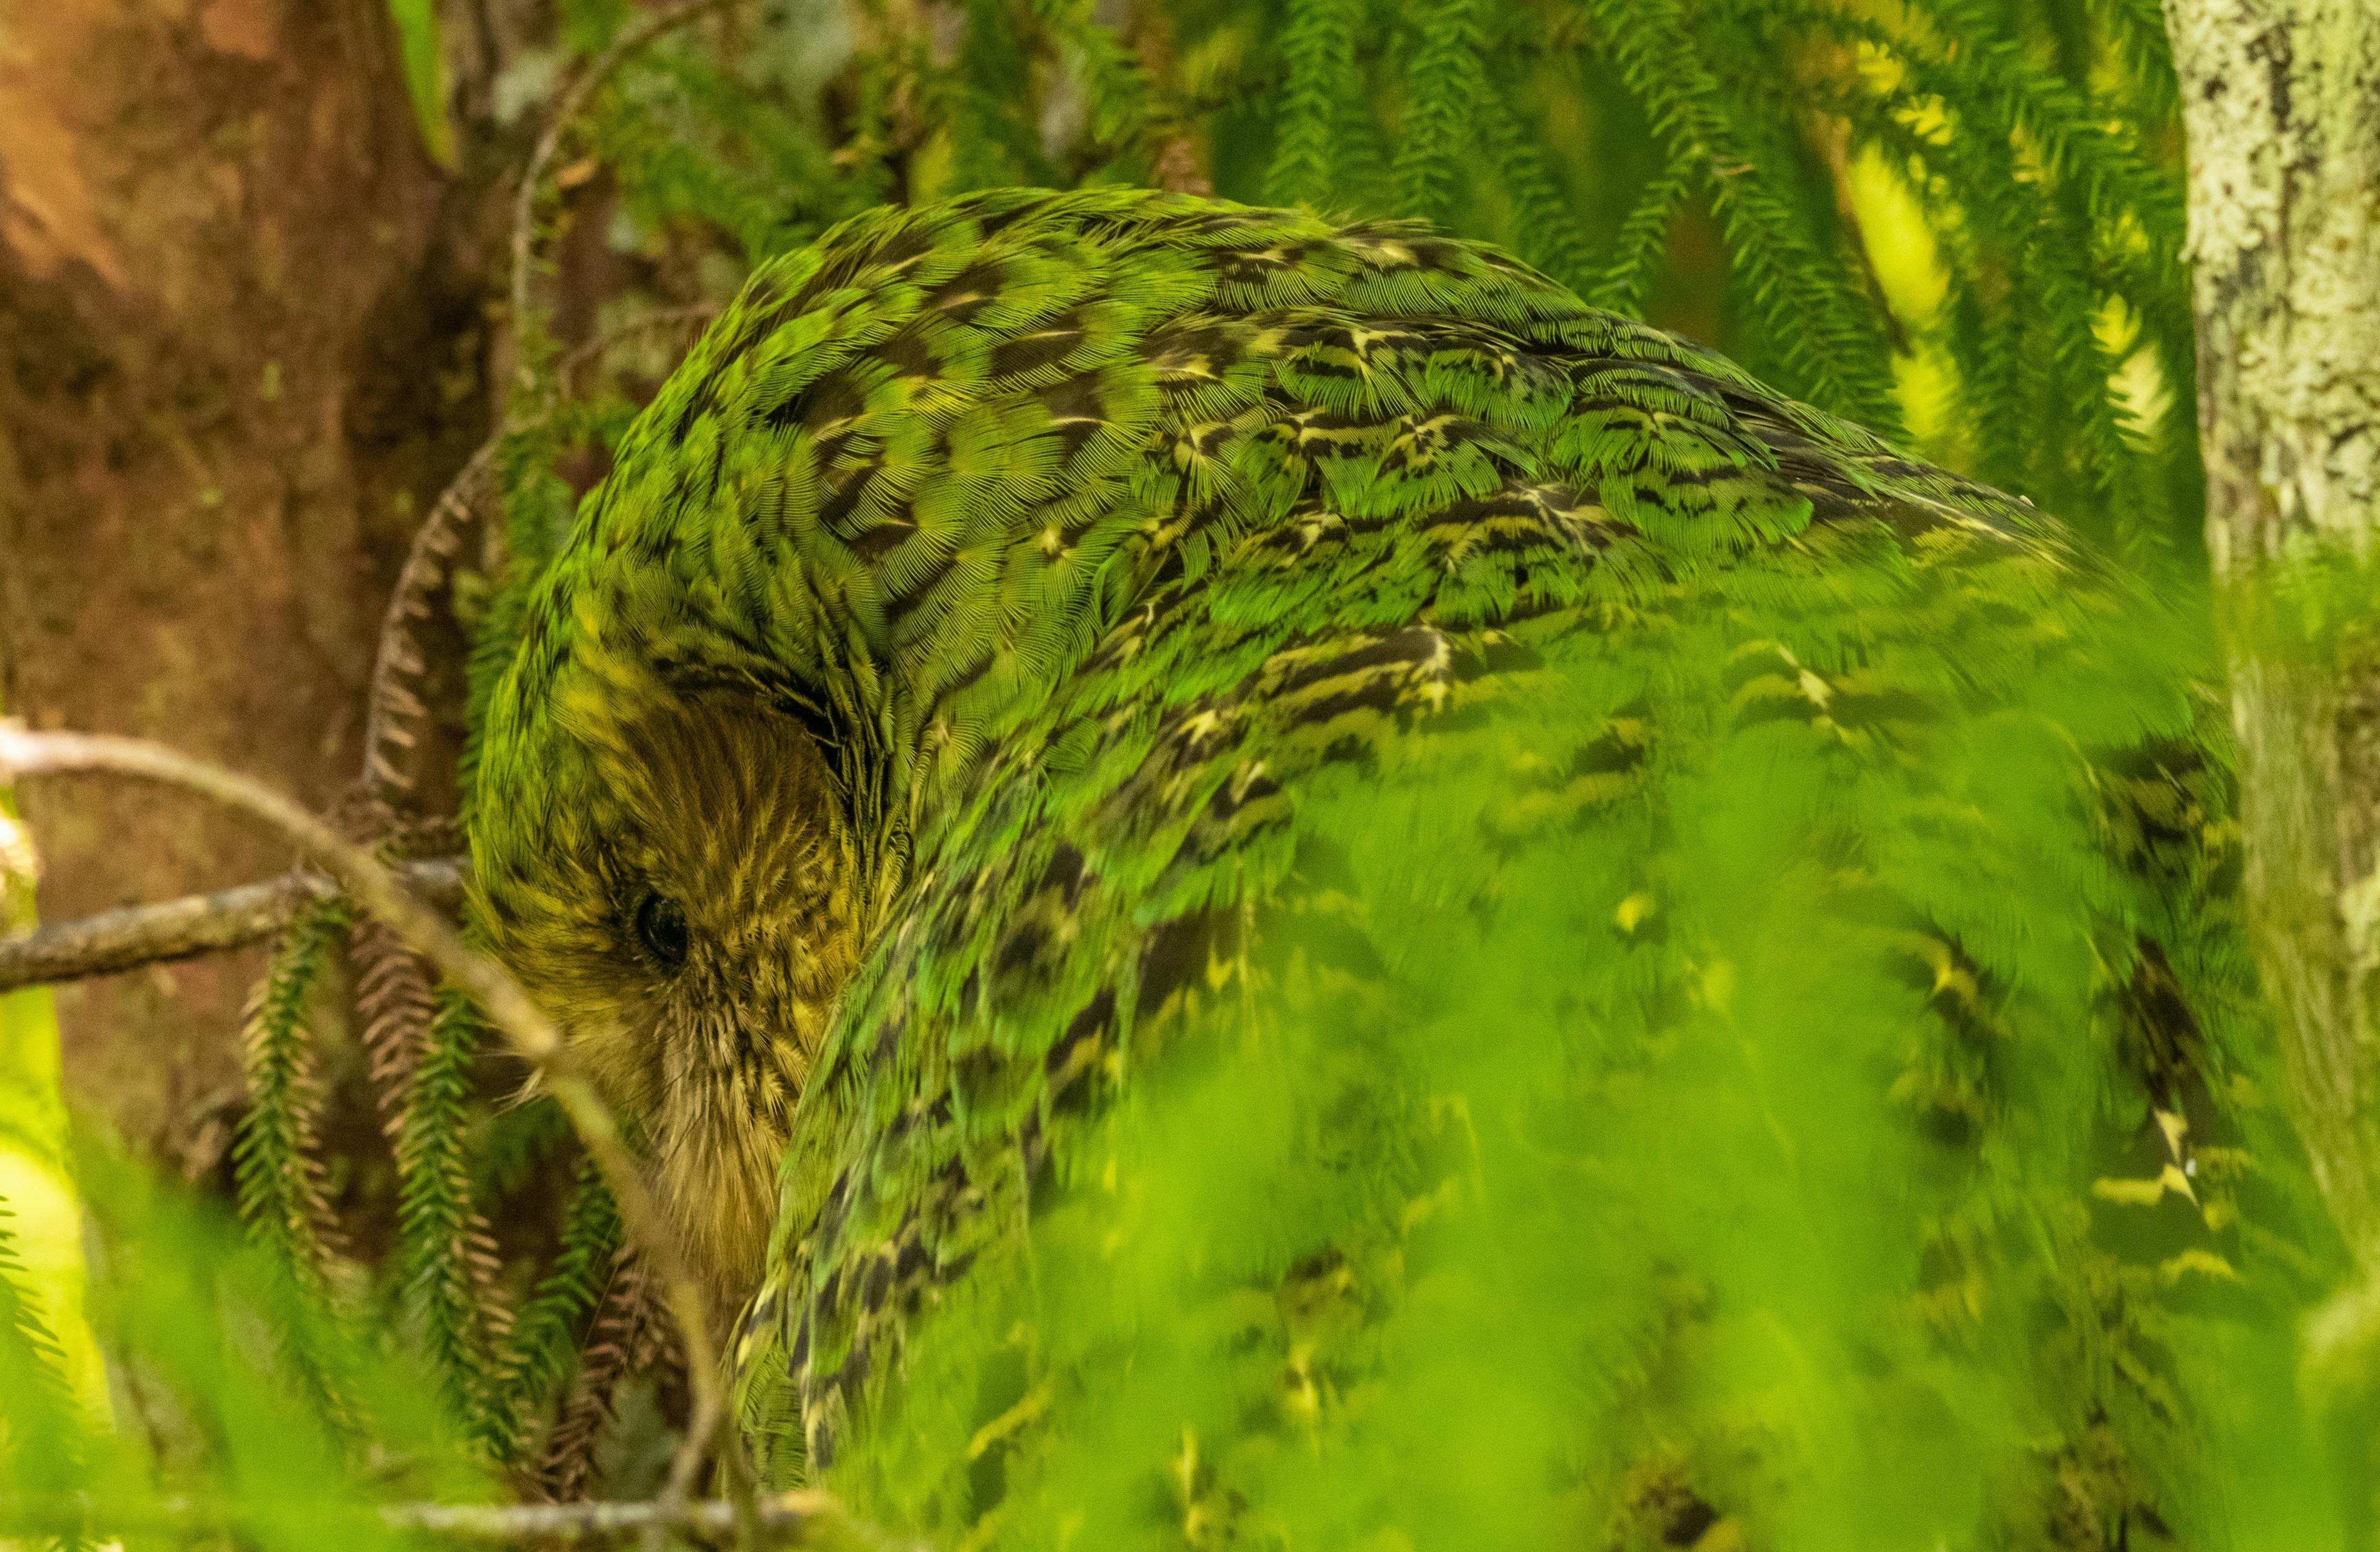 The green flightless parrot called a Kakapo